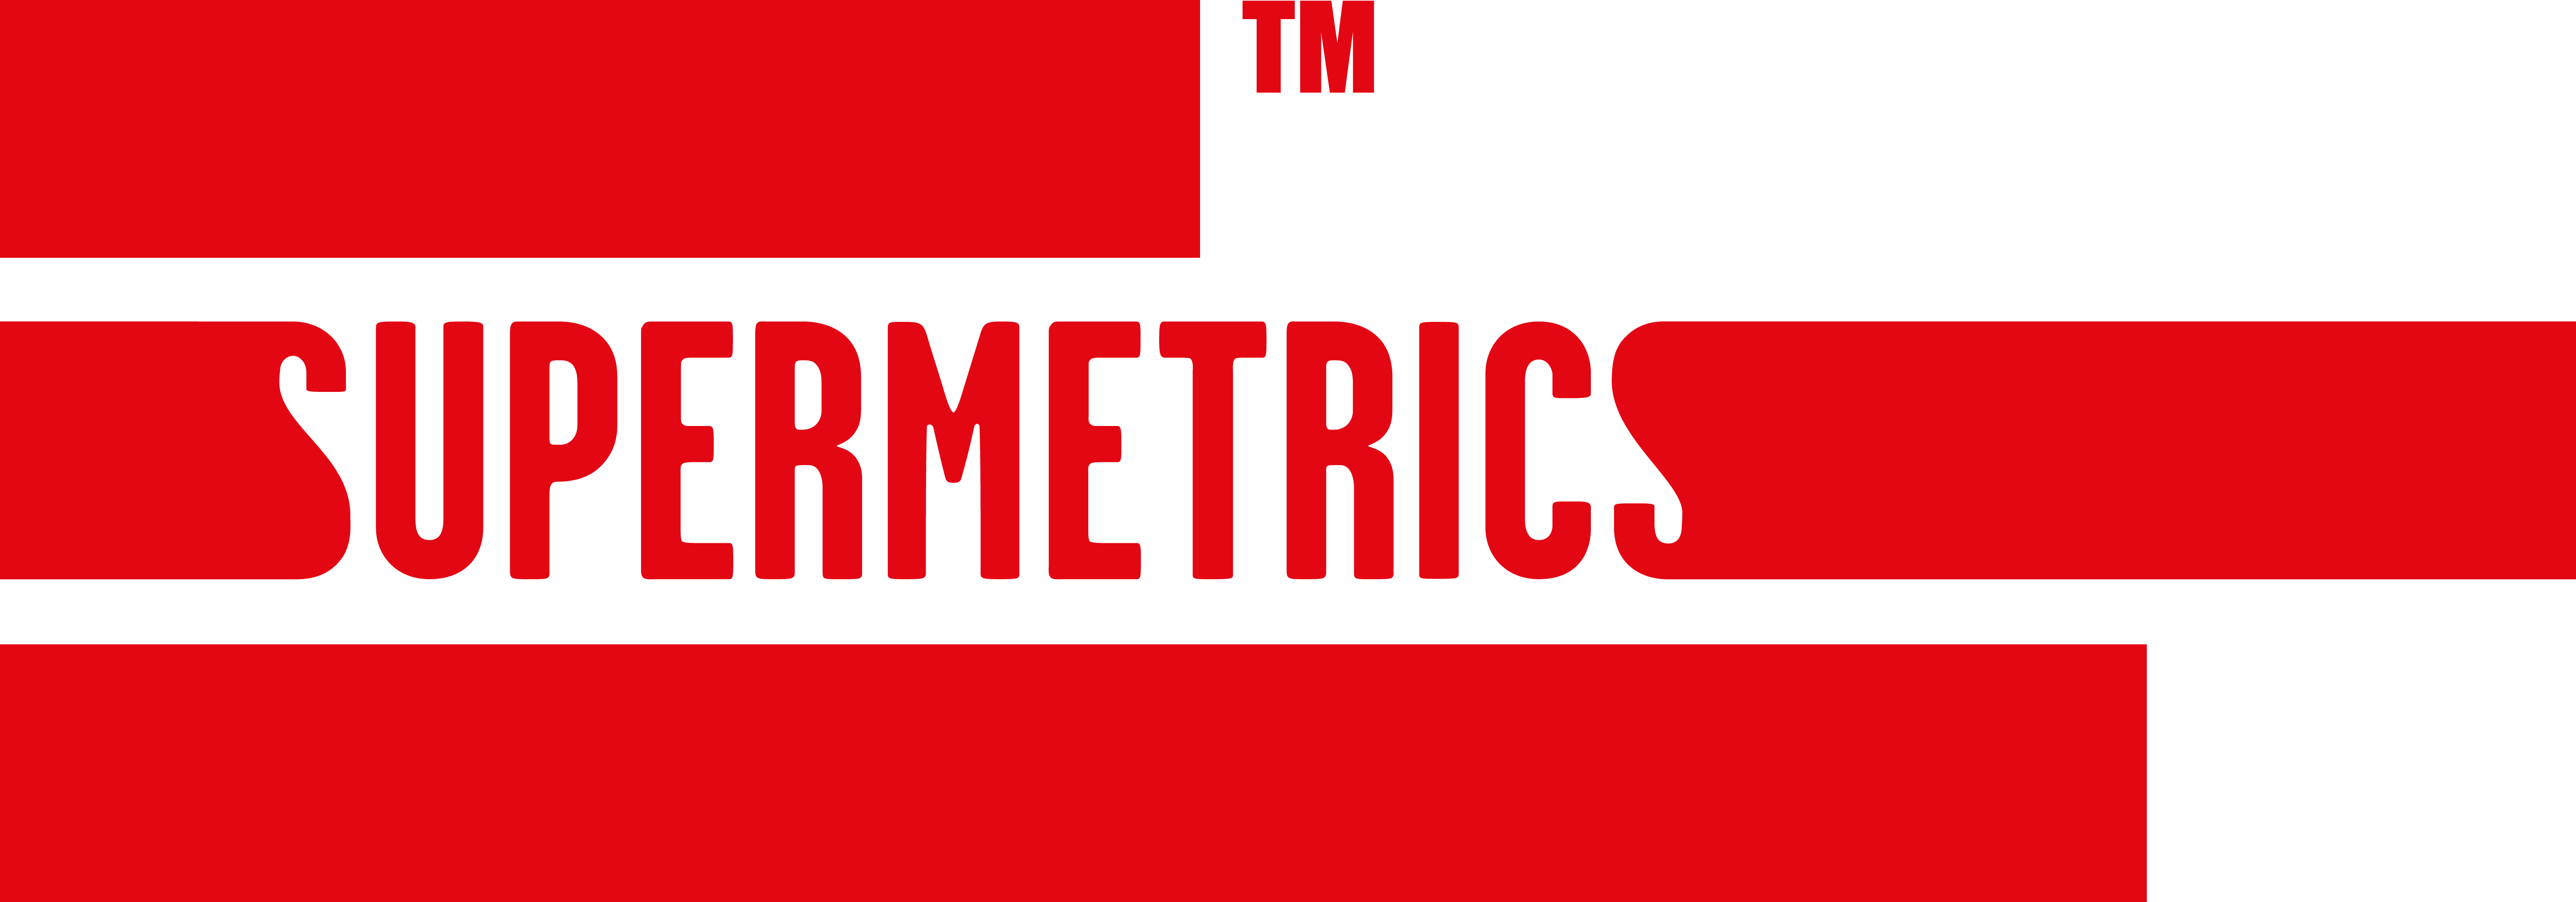 Supermetrics - New SaaS Software